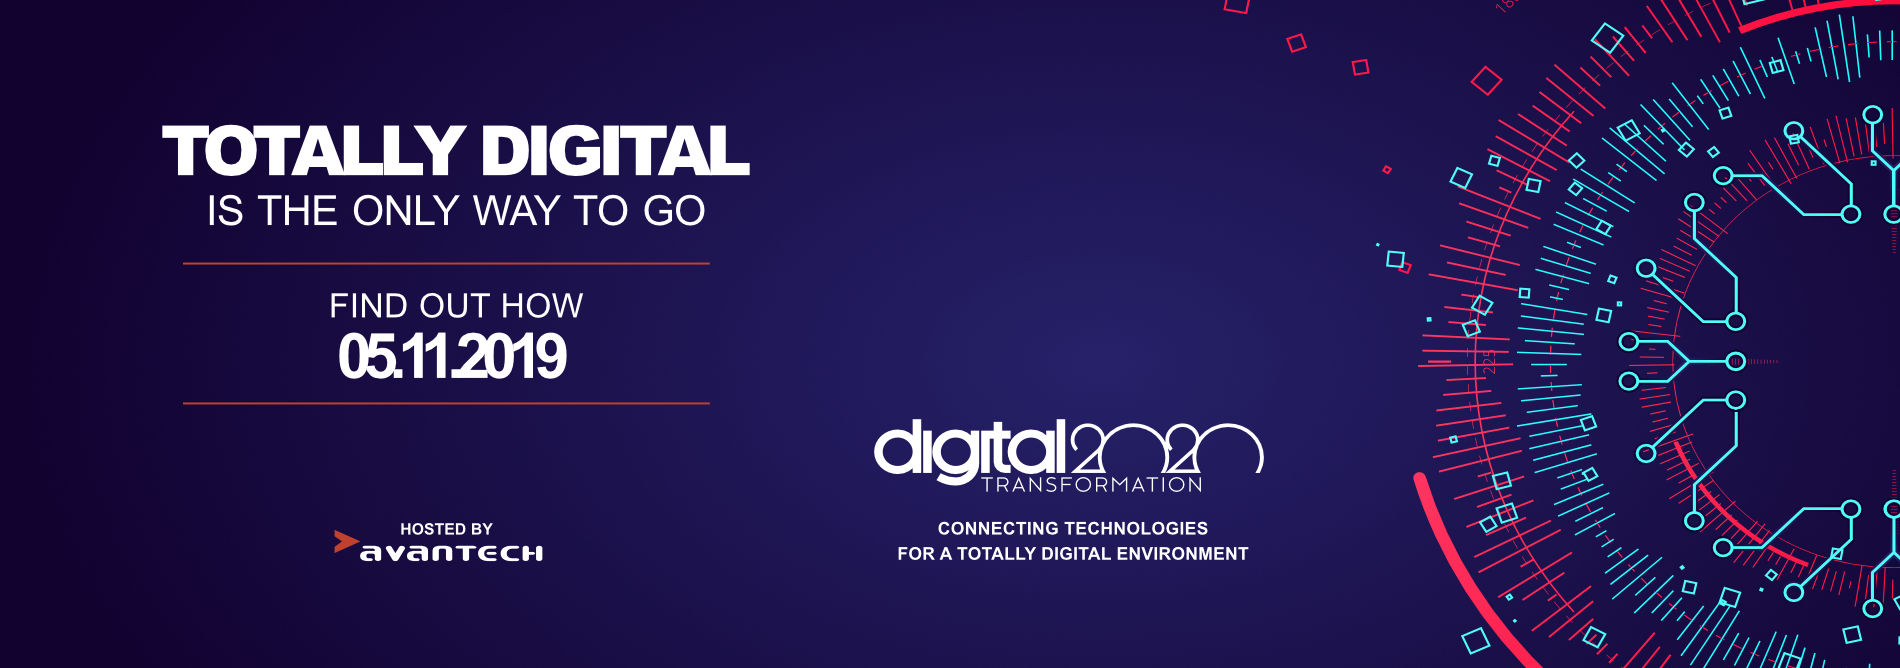 Digital transformation agenda_page banner